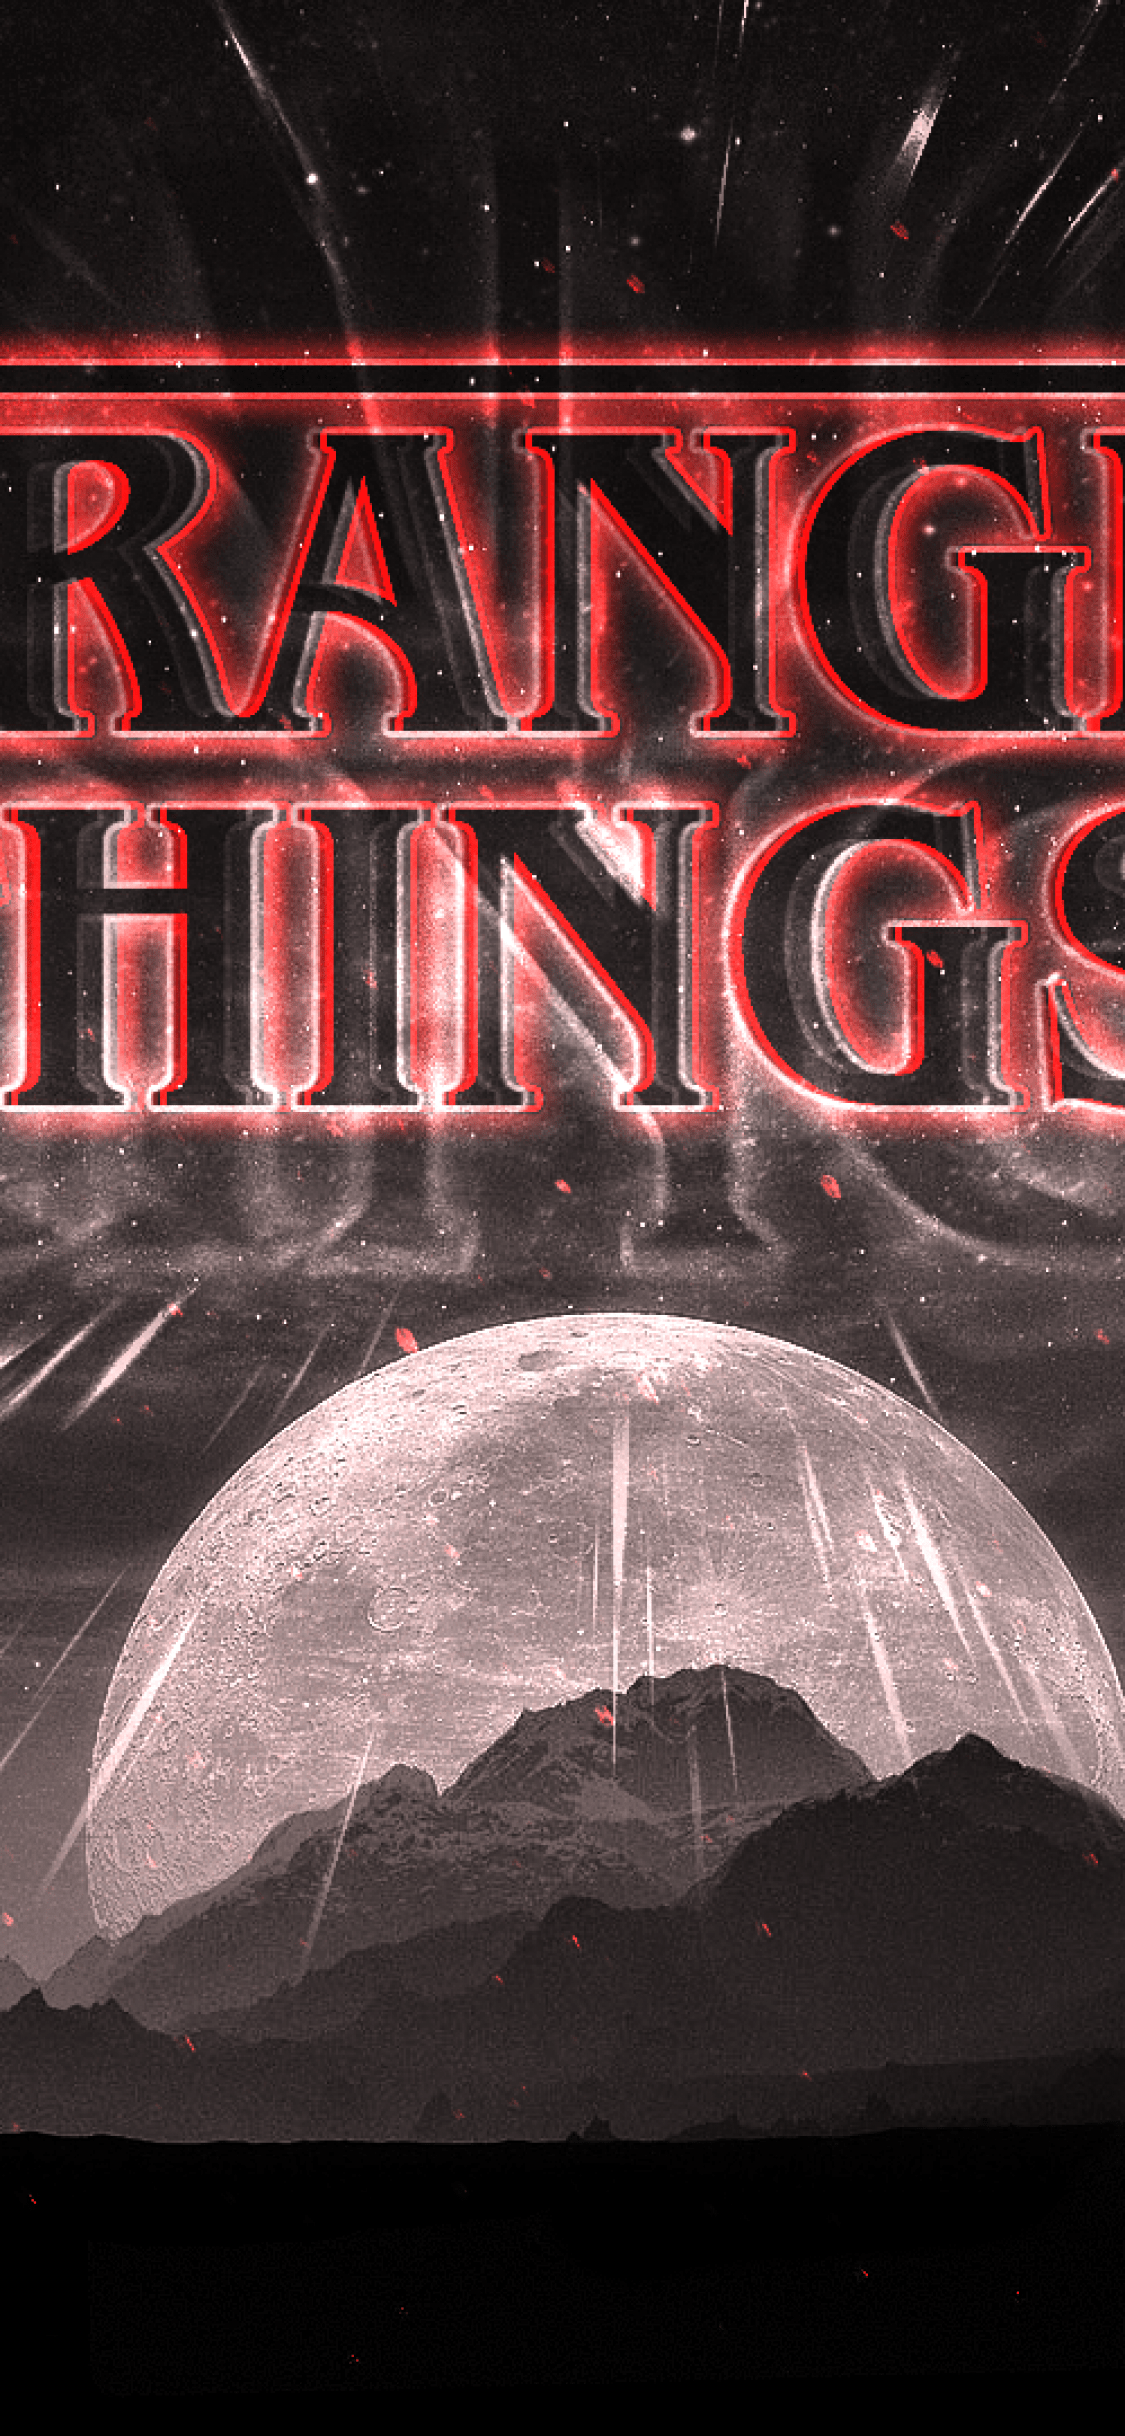 Stranger Things 3 Wallpaper HD cho Android - Tải về